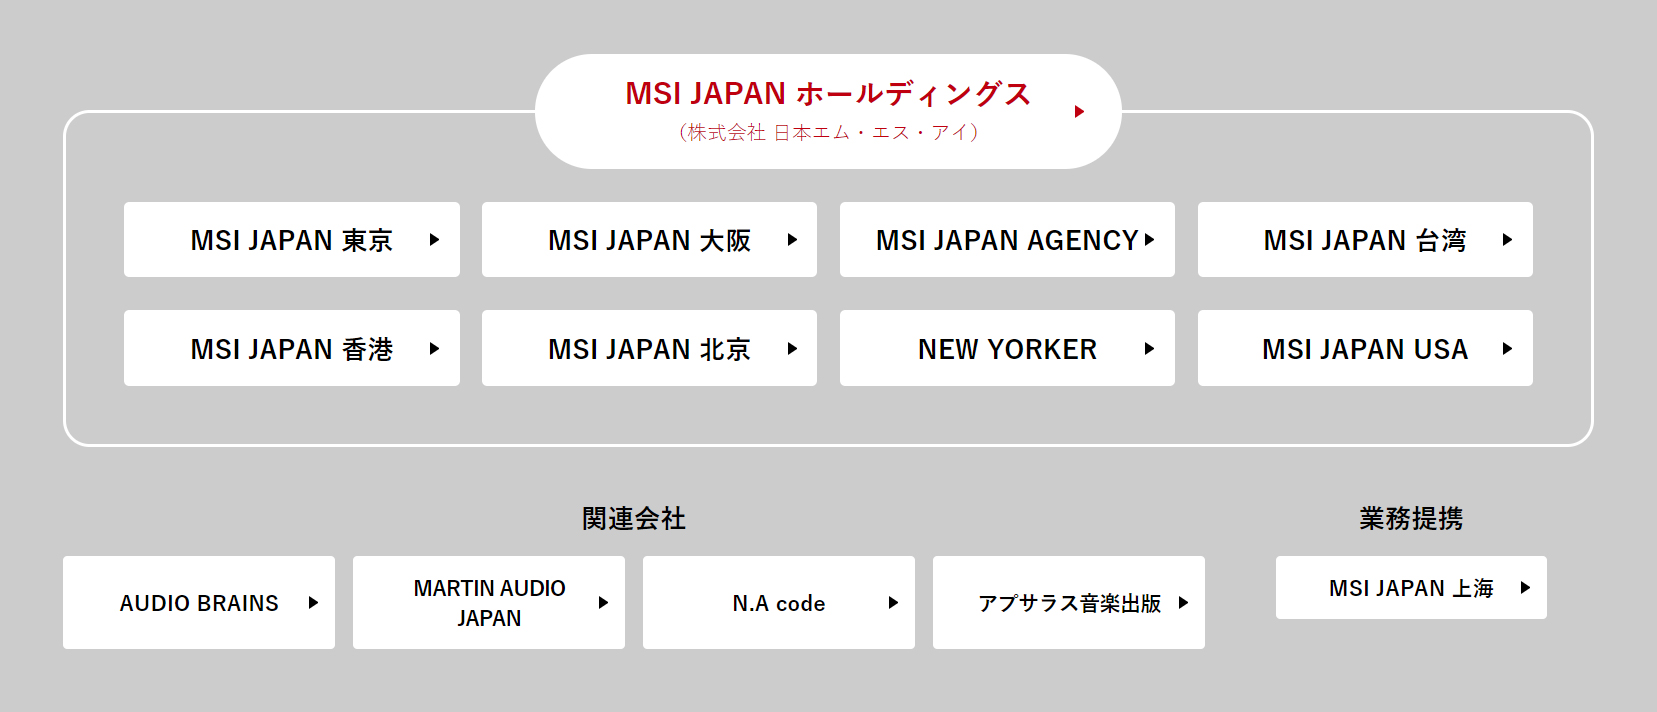 MSI JAPANグループの関連会社